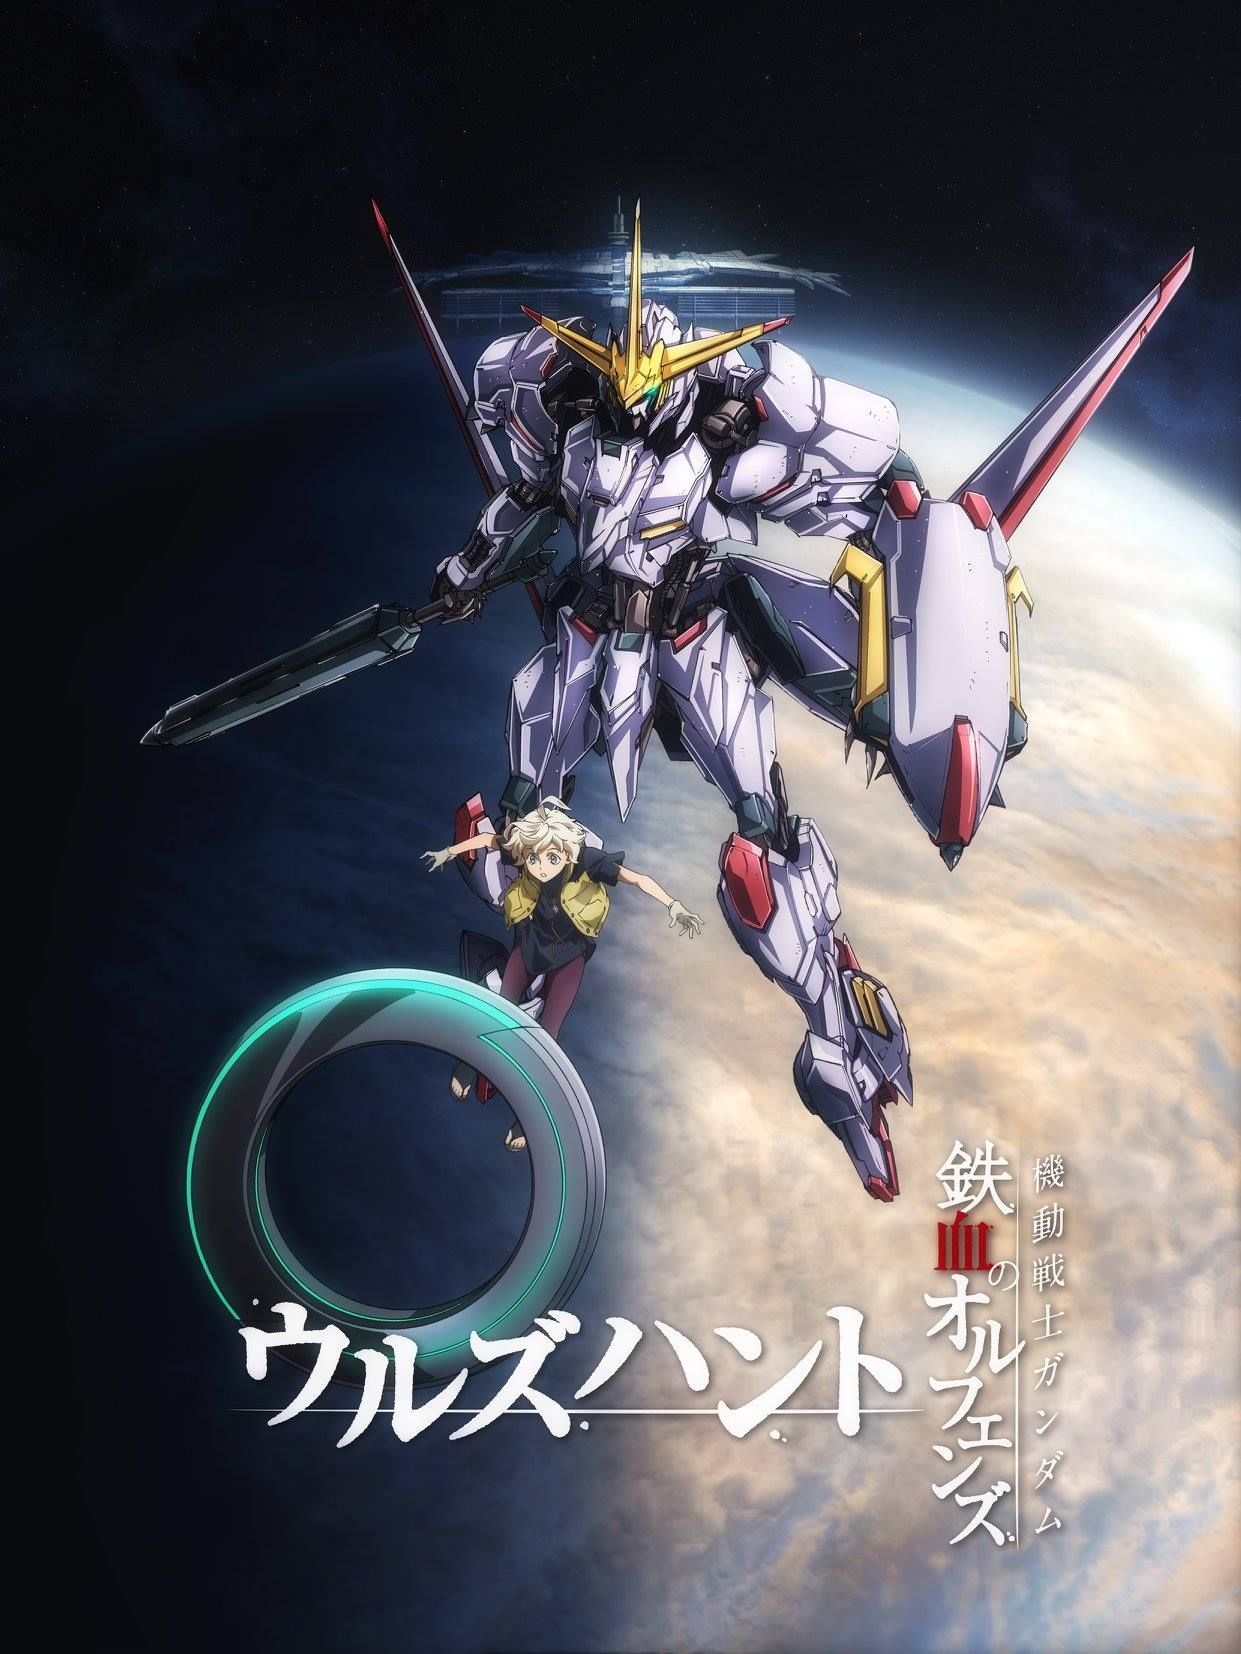 Overhauling your Gundam model for maximum cuteness | SoraNews24 -Japan News-